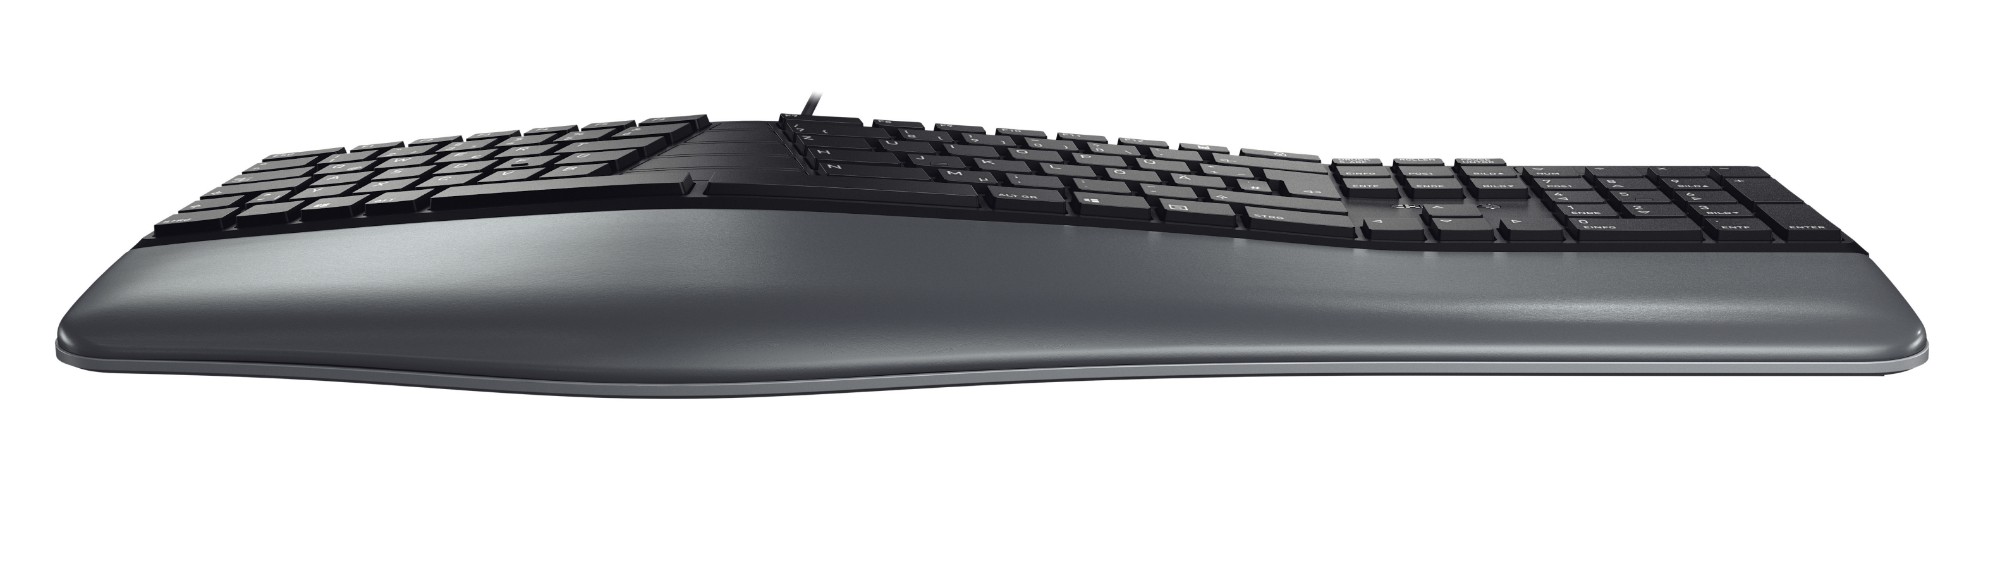 CHERRY KC 4500 ERGO keyboard USB QWERTY UK English Black